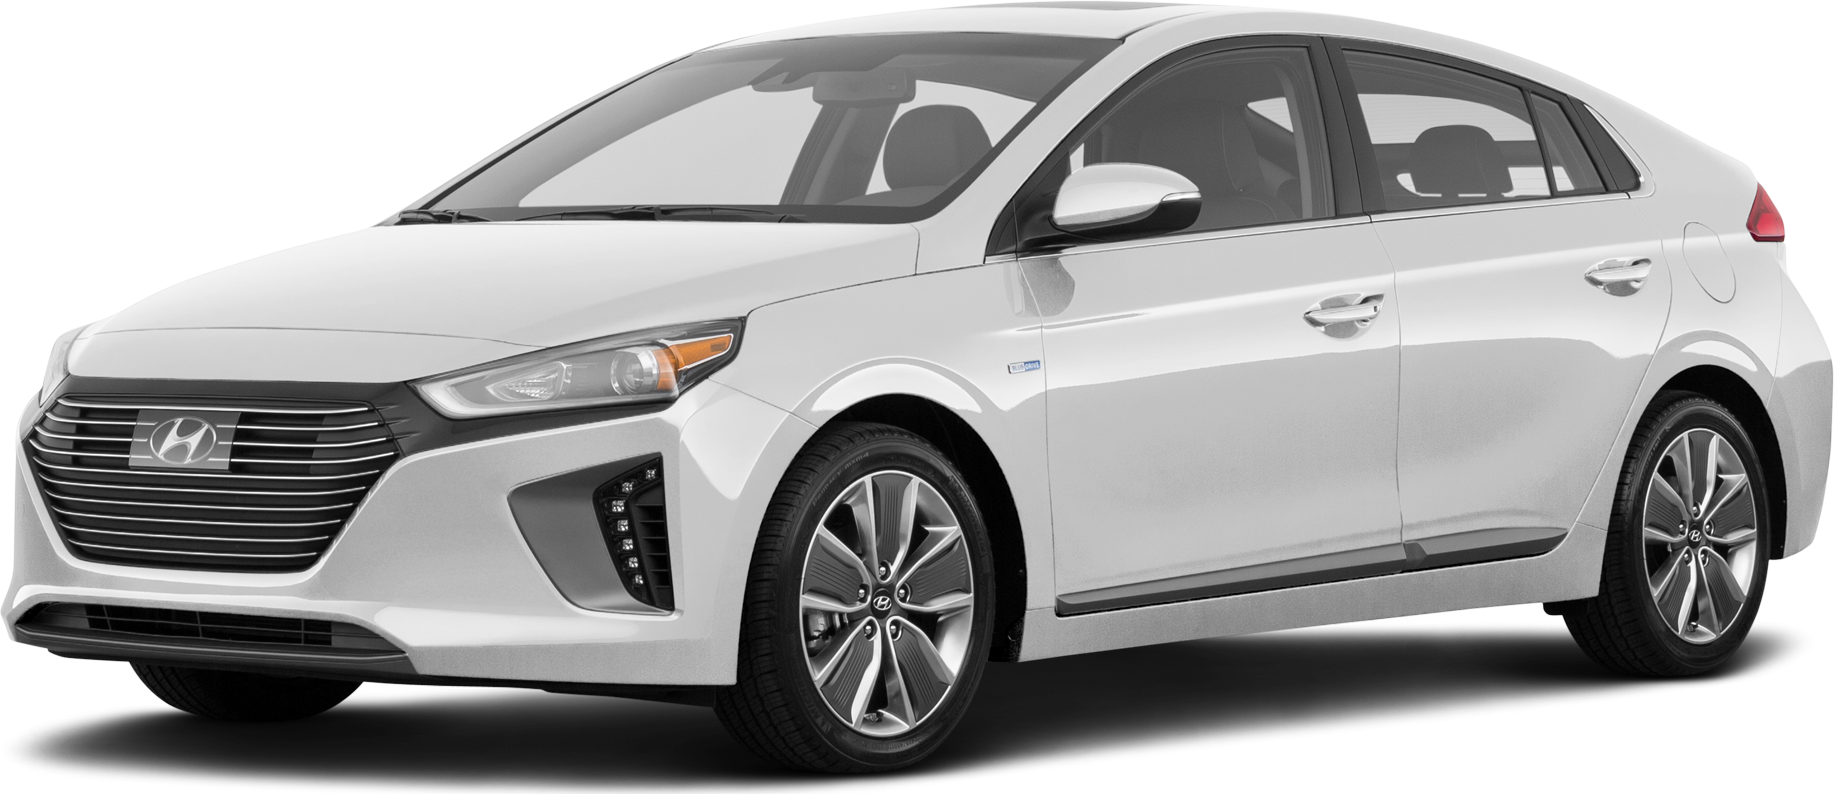 2019 Hyundai Ioniq Hybrid Price, Value, Ratings & Reviews